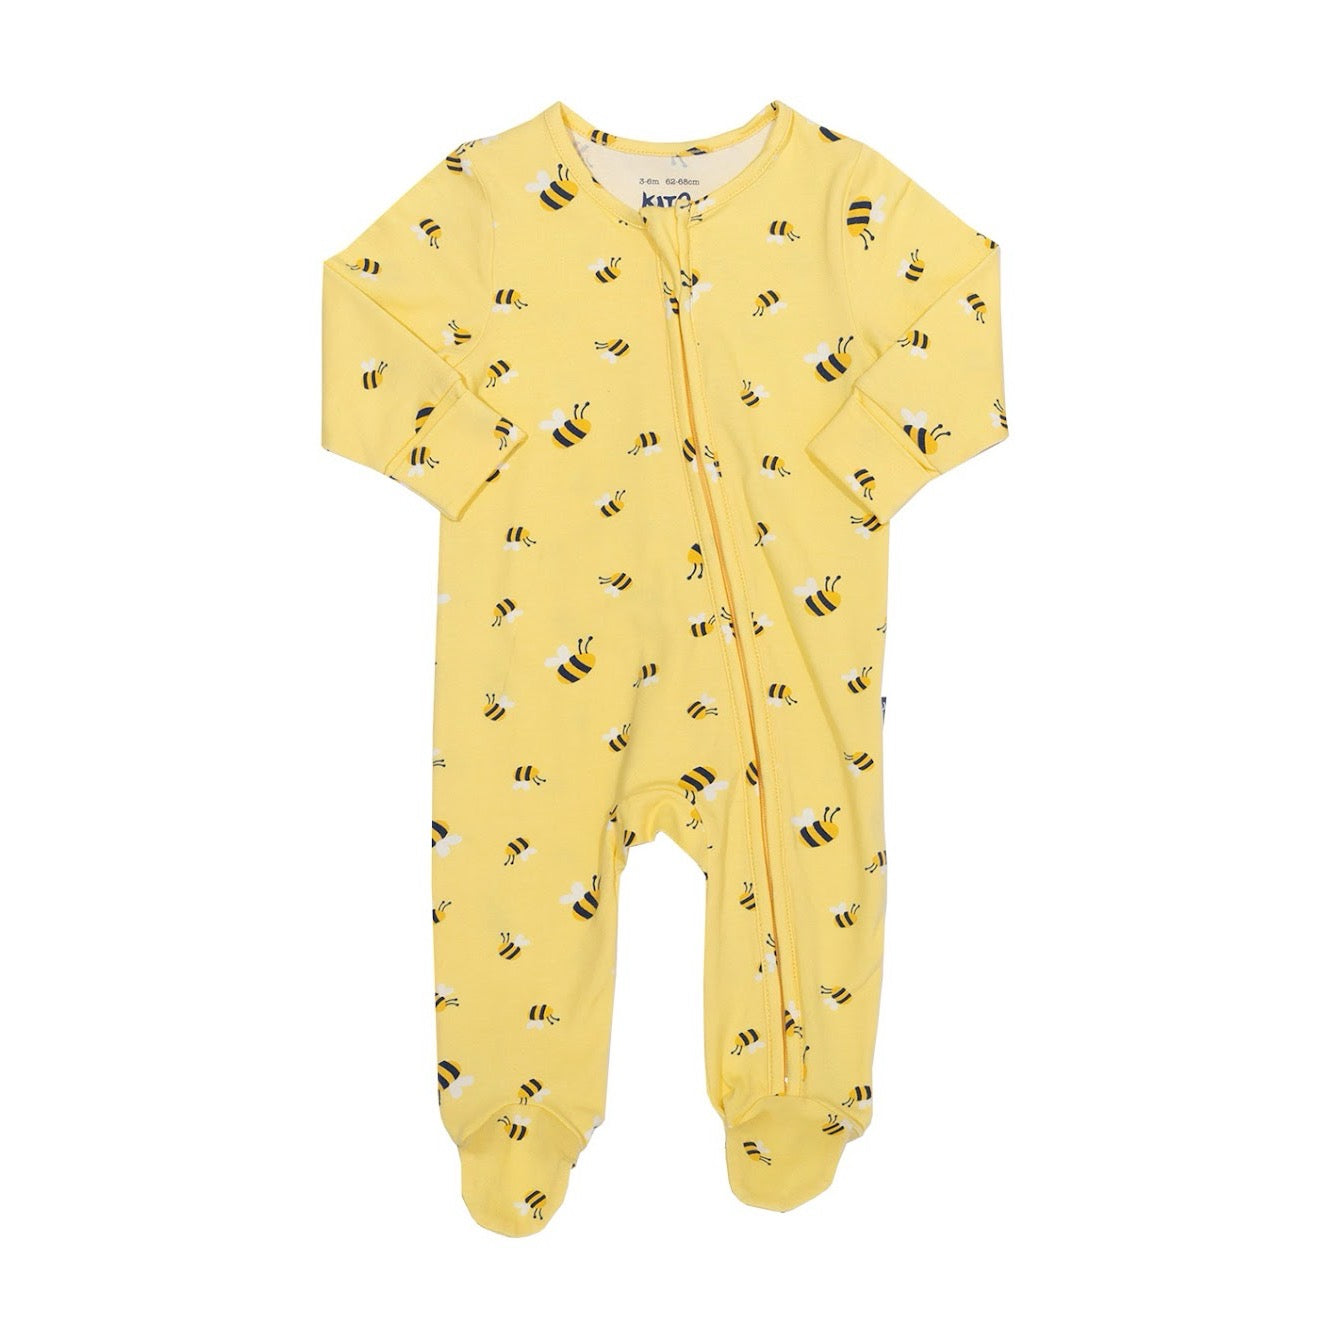 Kite Bumble Baby Sleepsuit 41-8611 Clothing NEWBORN / Yellow,0-1M / Yellow,0-3M / Yellow,3-6M / Yellow,6-9M / Yellow